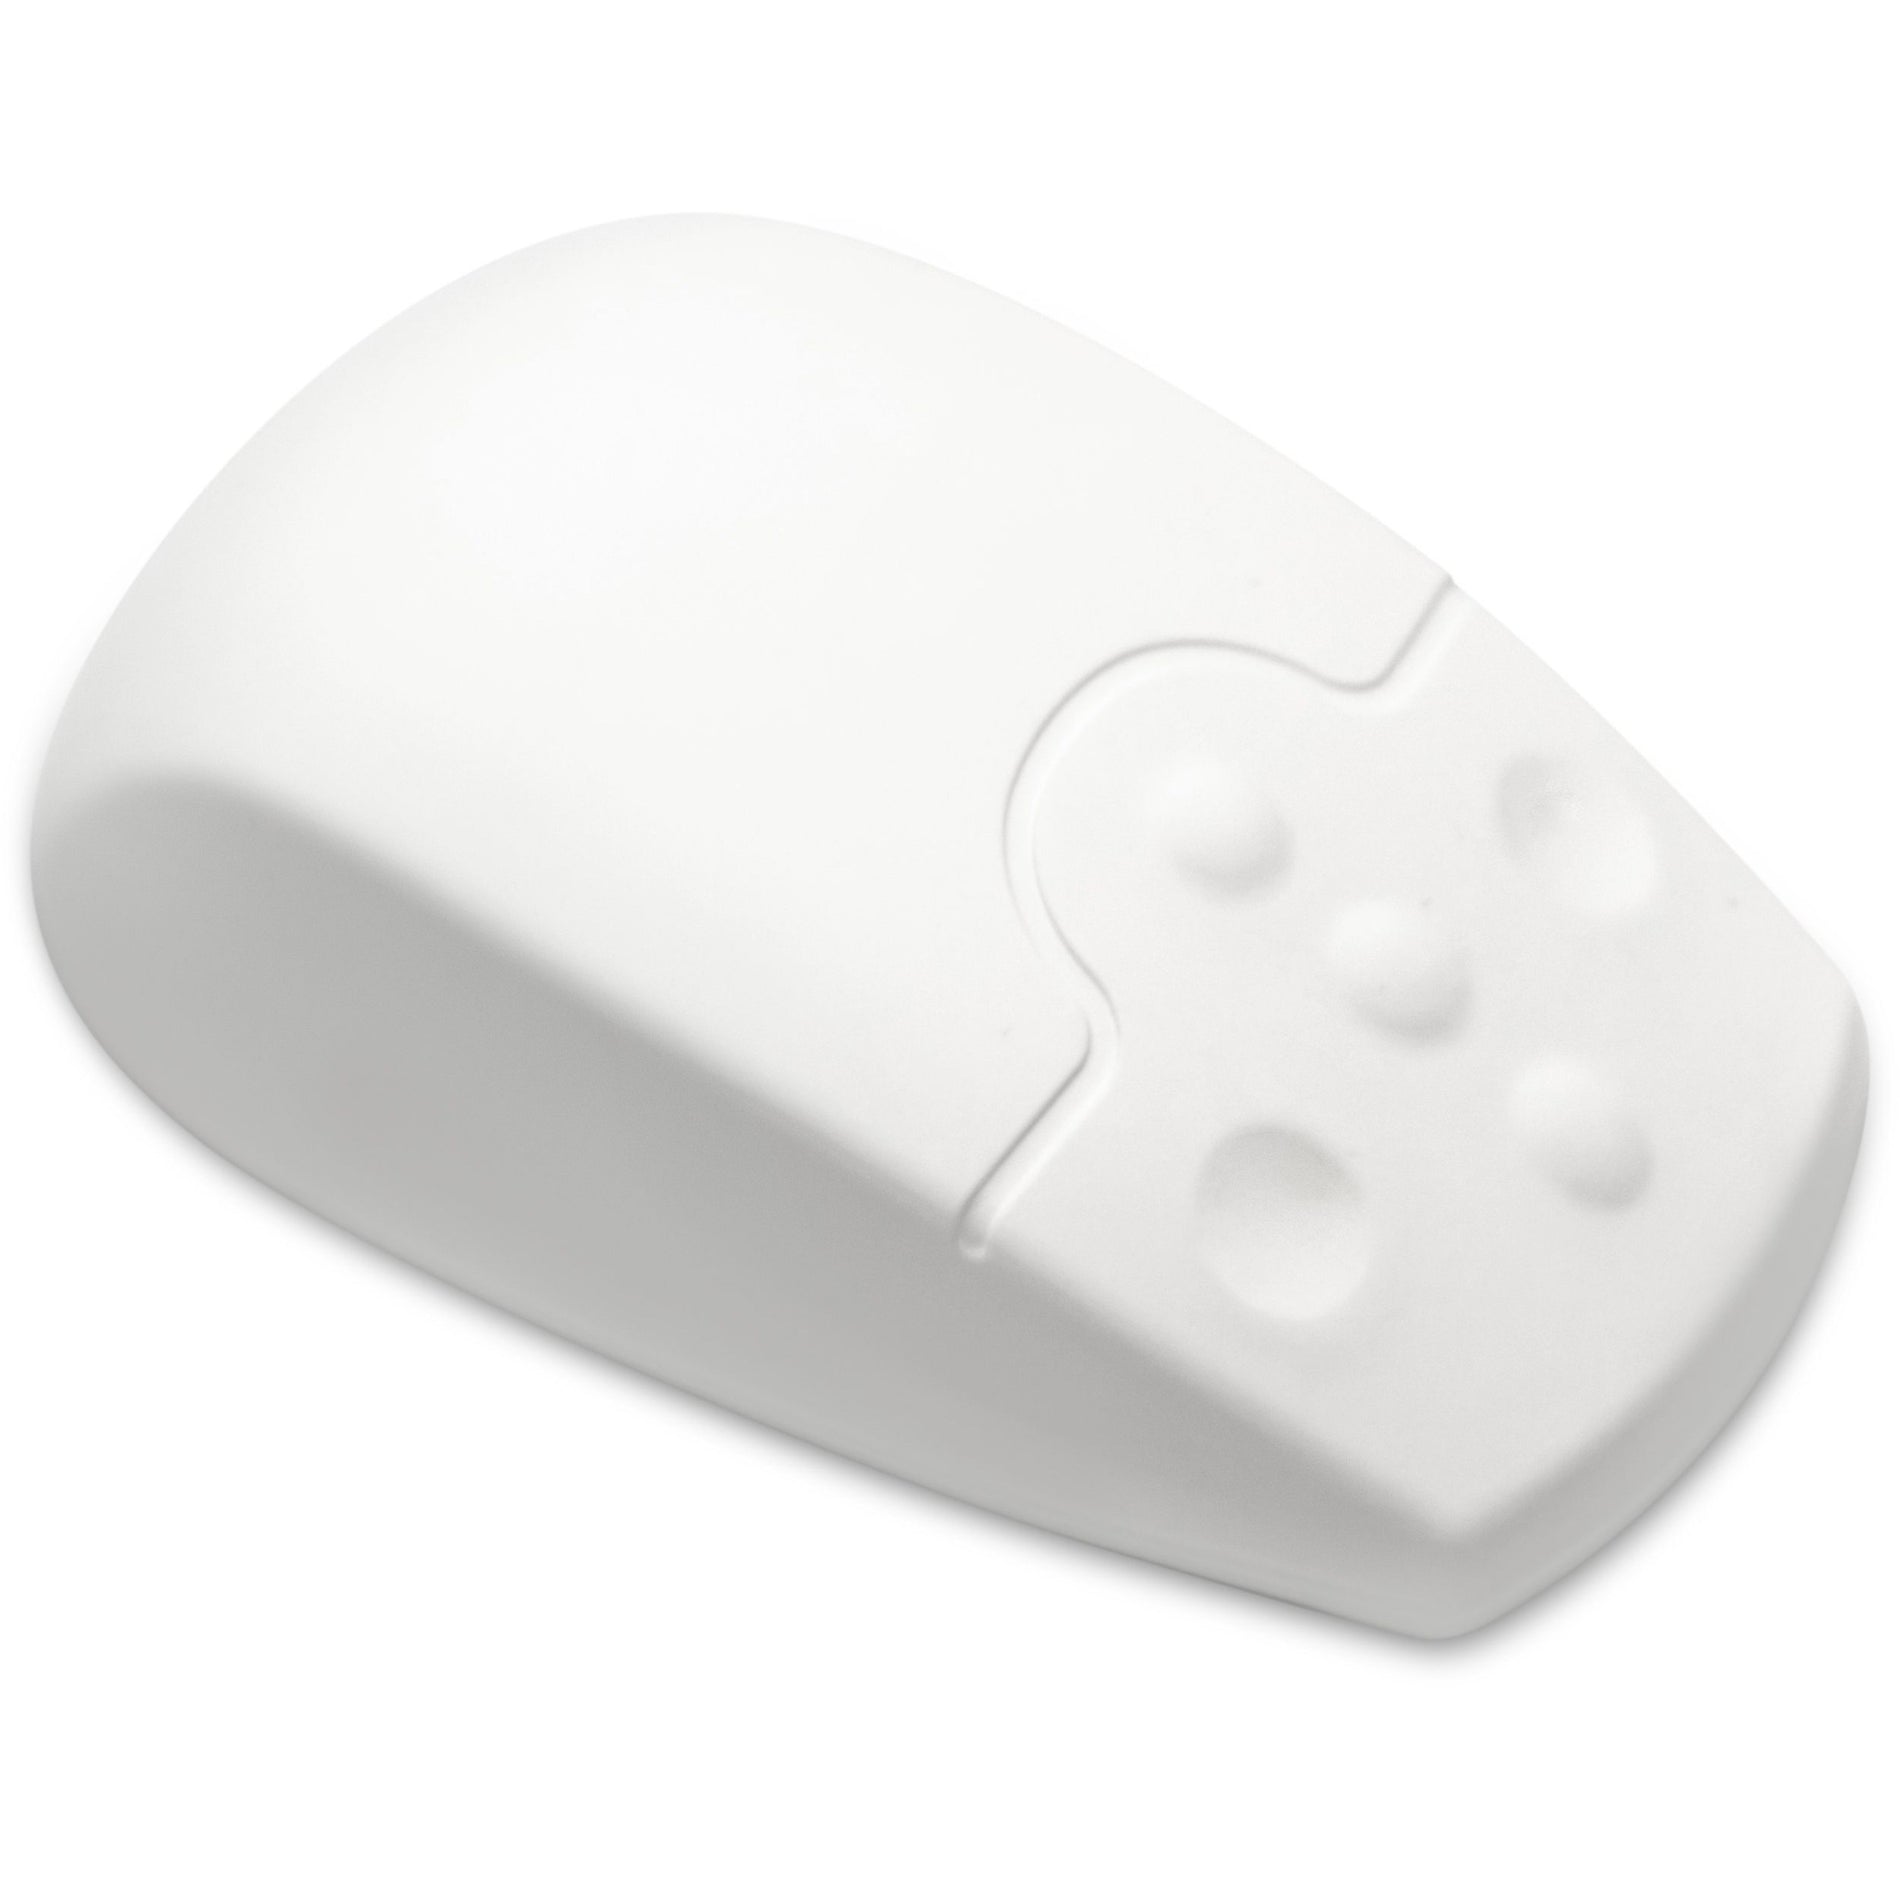 SterileFLAT SF08-15 SterileMOUSE-LASER Mouse, Wireless, White